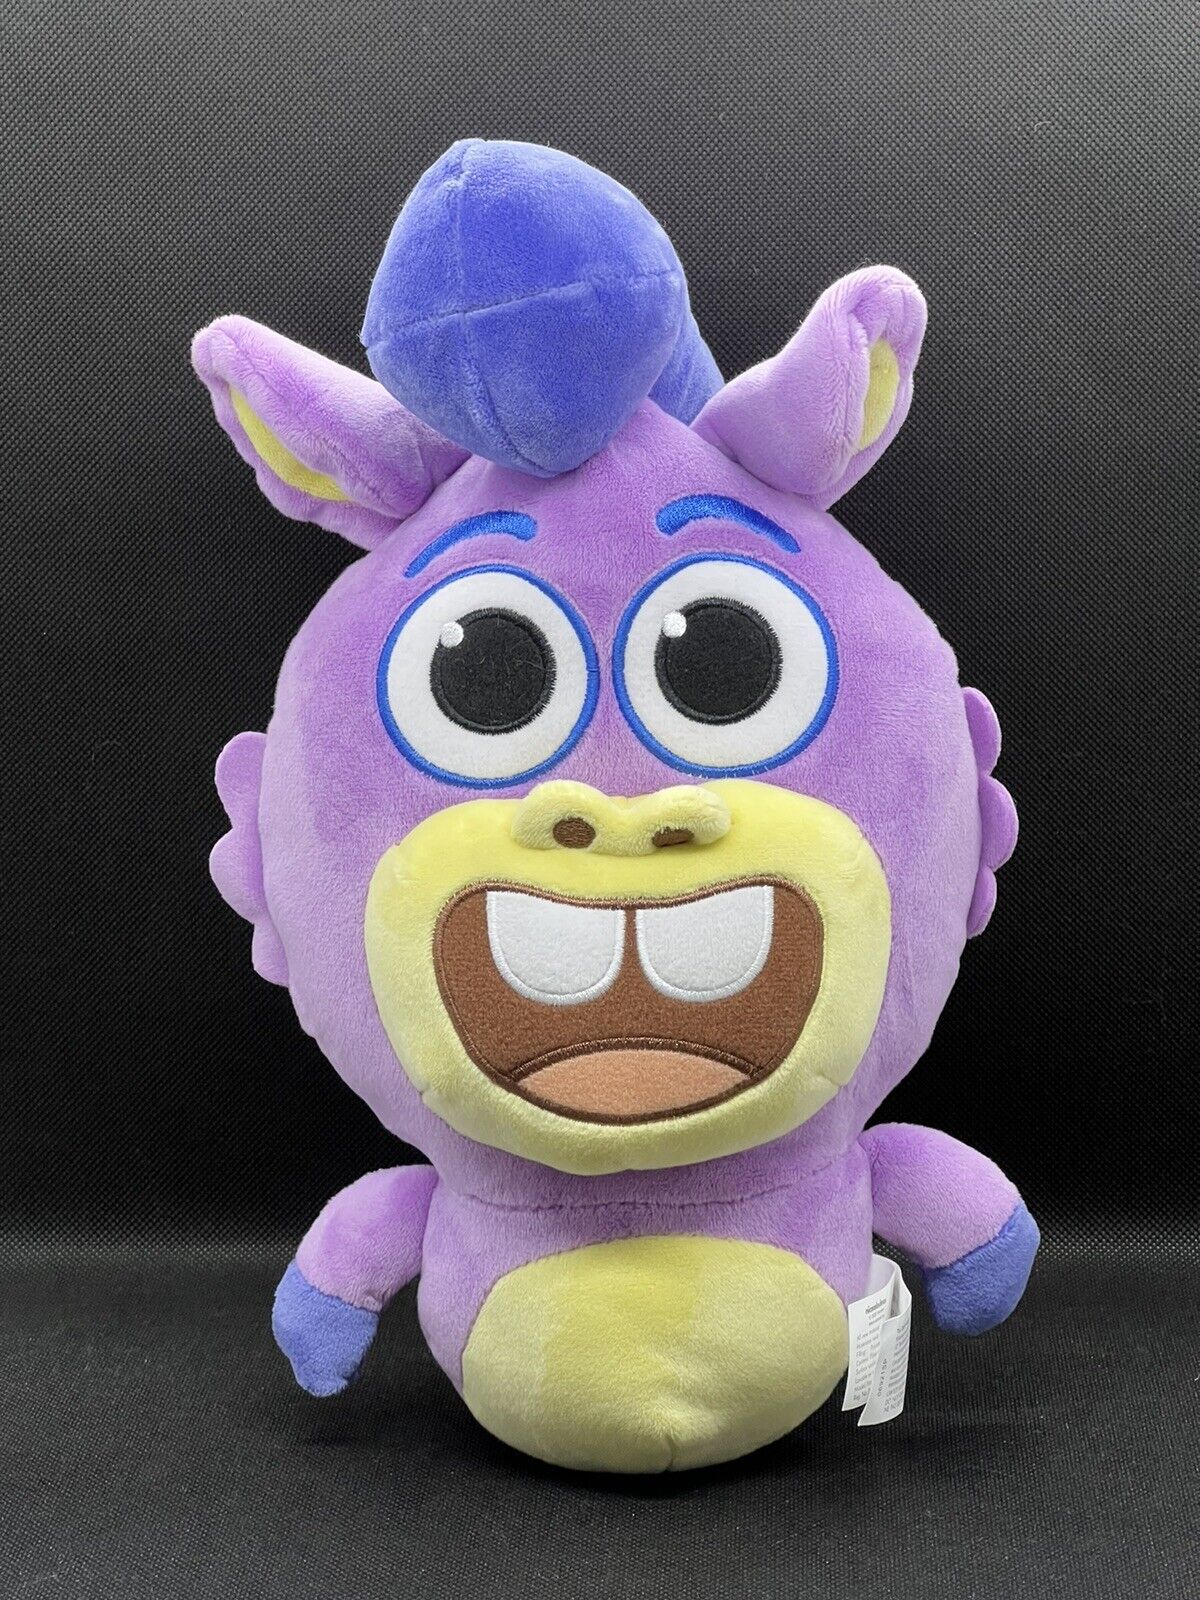 Baby Shark Big Show Purple Chucks Seahorse Plush Fun Friend Singing Musical  Toy 771171616467 | eBay